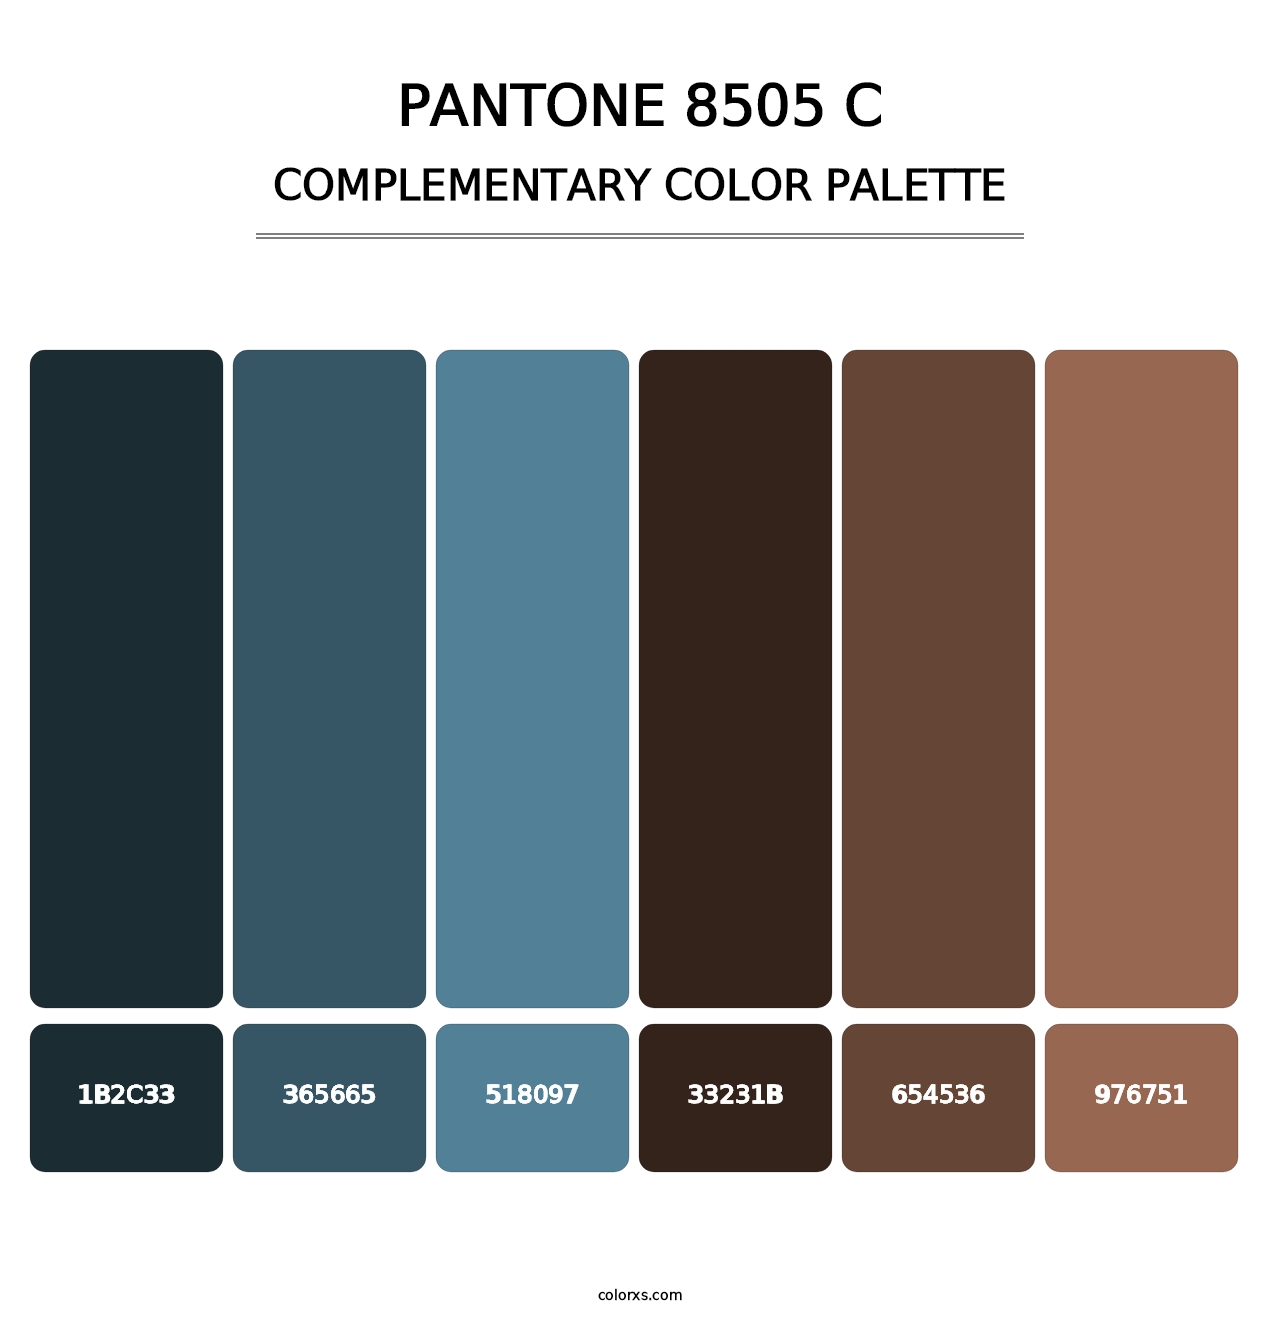 PANTONE 8505 C - Complementary Color Palette